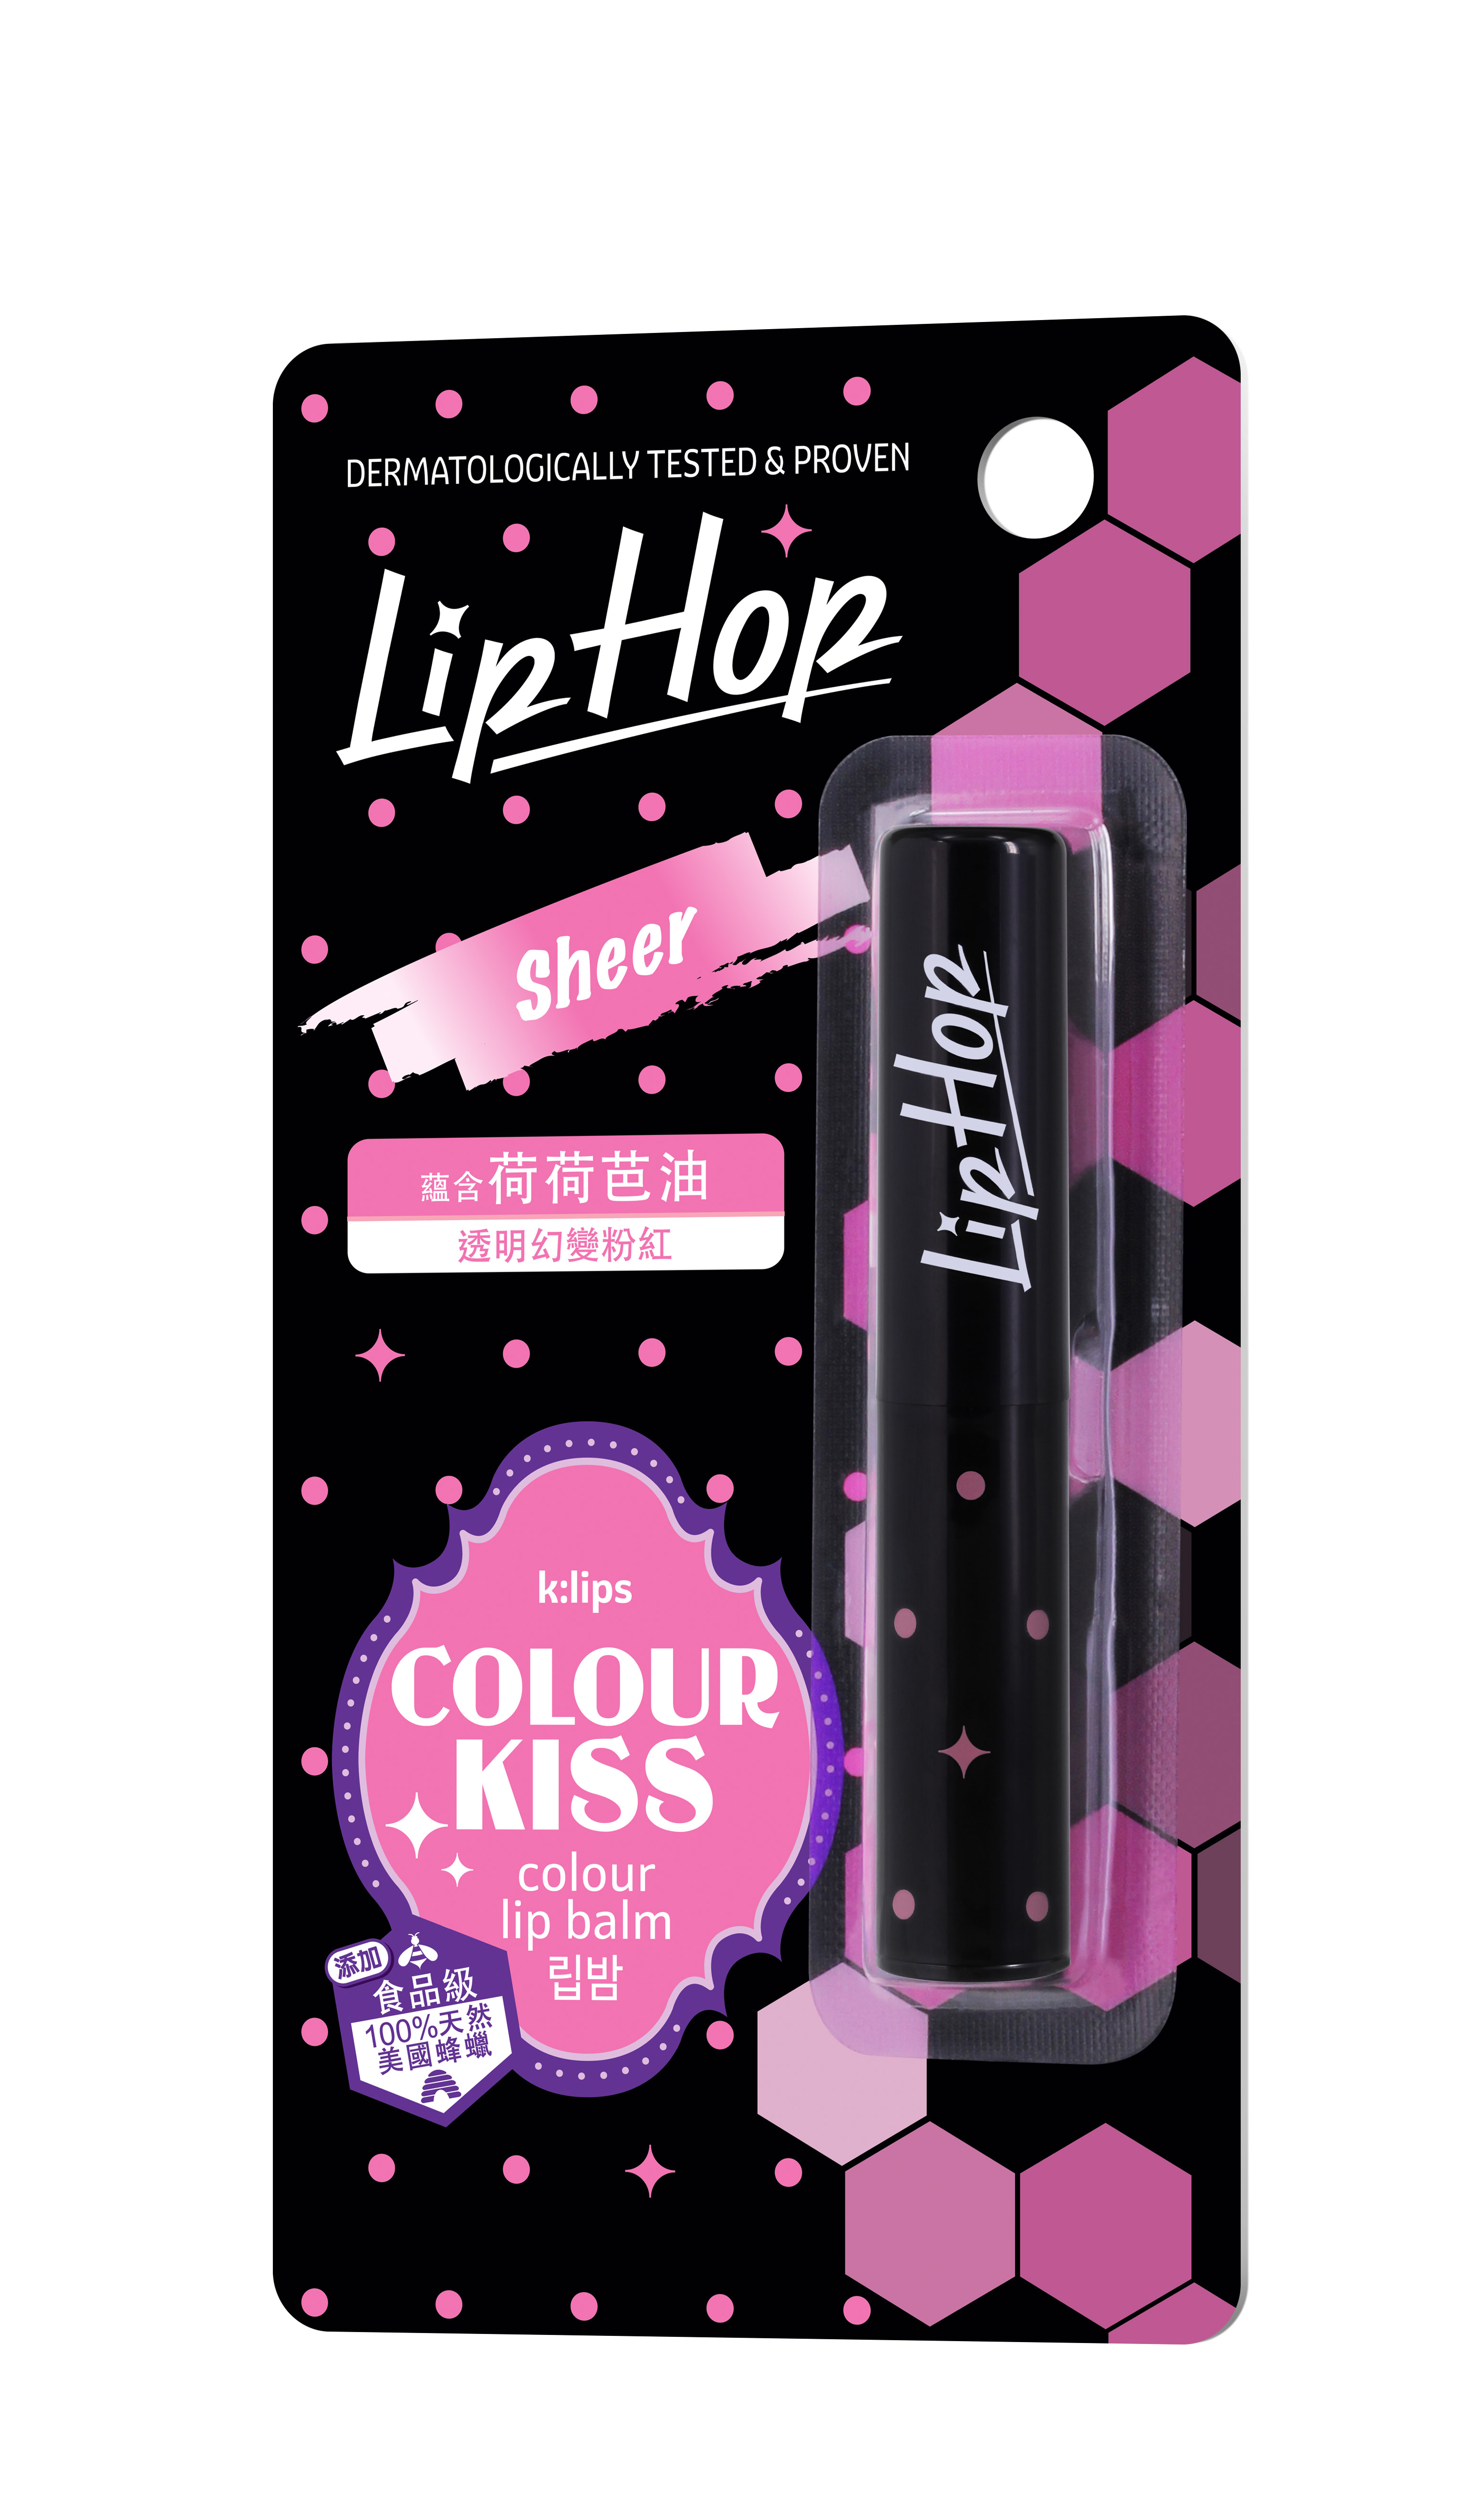 LipHop Colour Kiss變色潤唇膏 –透明幻變粉紅色，潤唇膏沒有過份鮮艷色彩，淡紅中保持一份甜美感。蘊含天然乳木果油及荷荷巴油，保濕滋潤，透亮甜美雙唇。標準價：$ 34.9